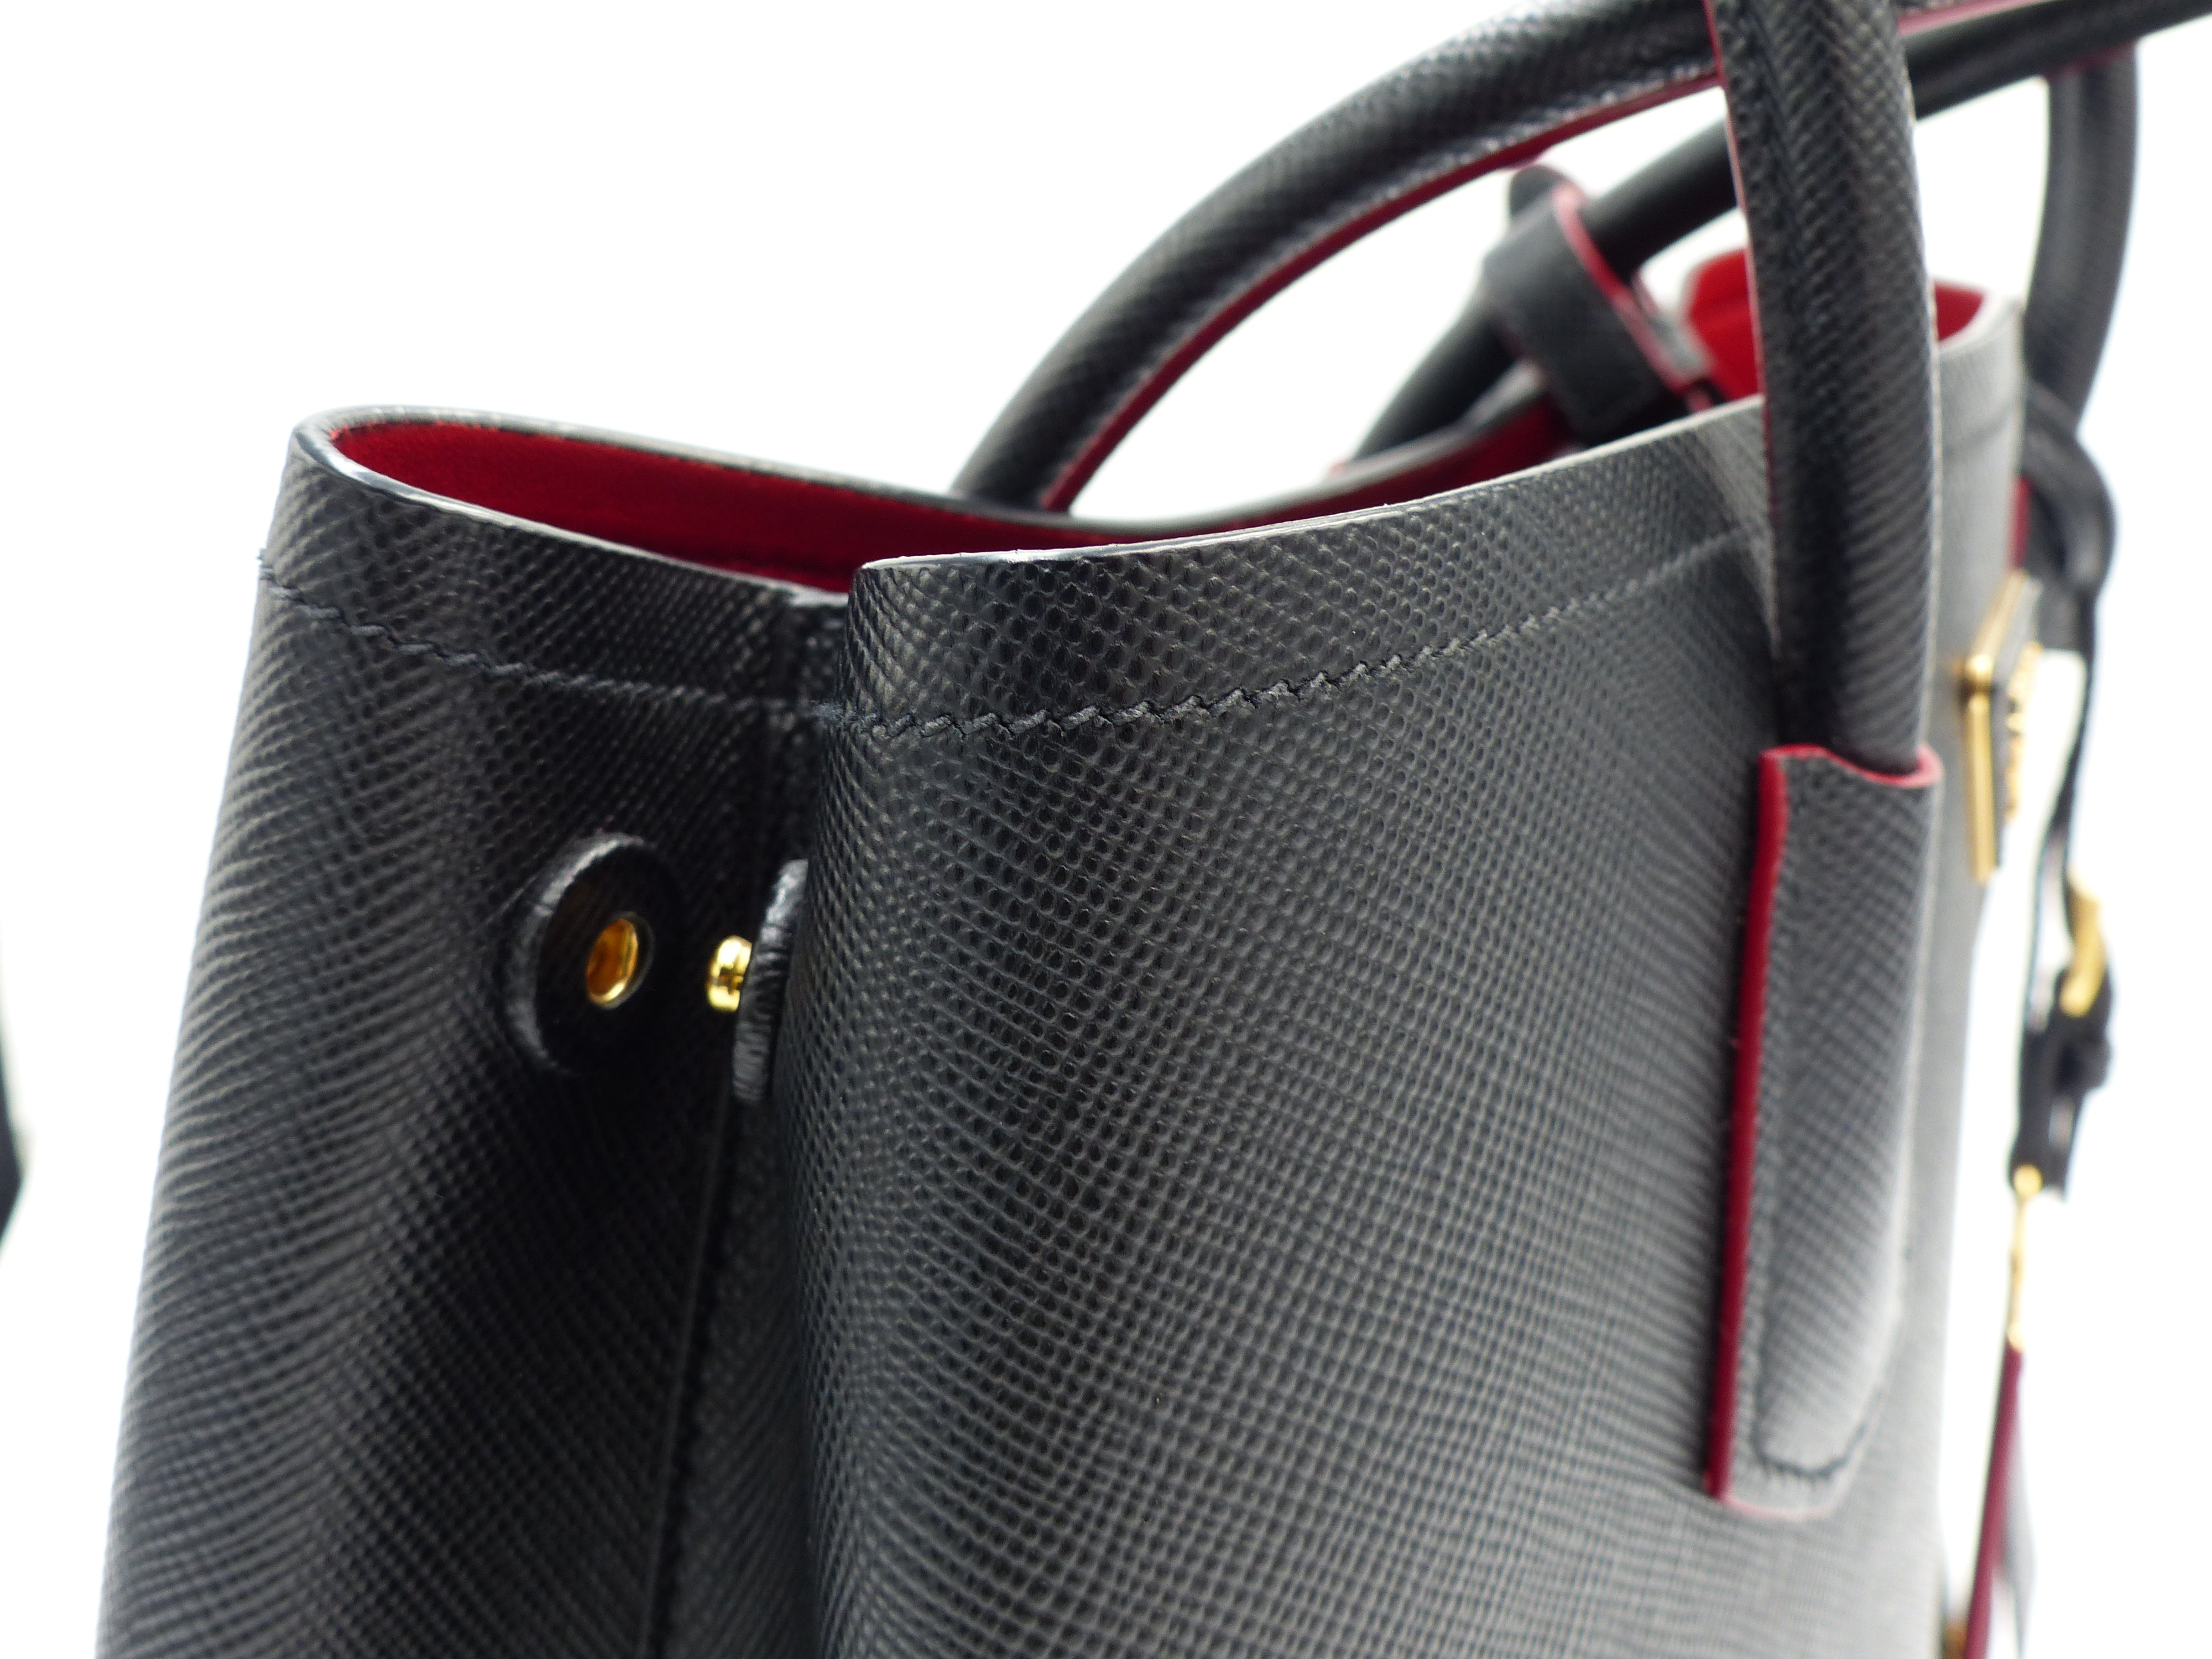 Red Prada Bags for Women | Lyst